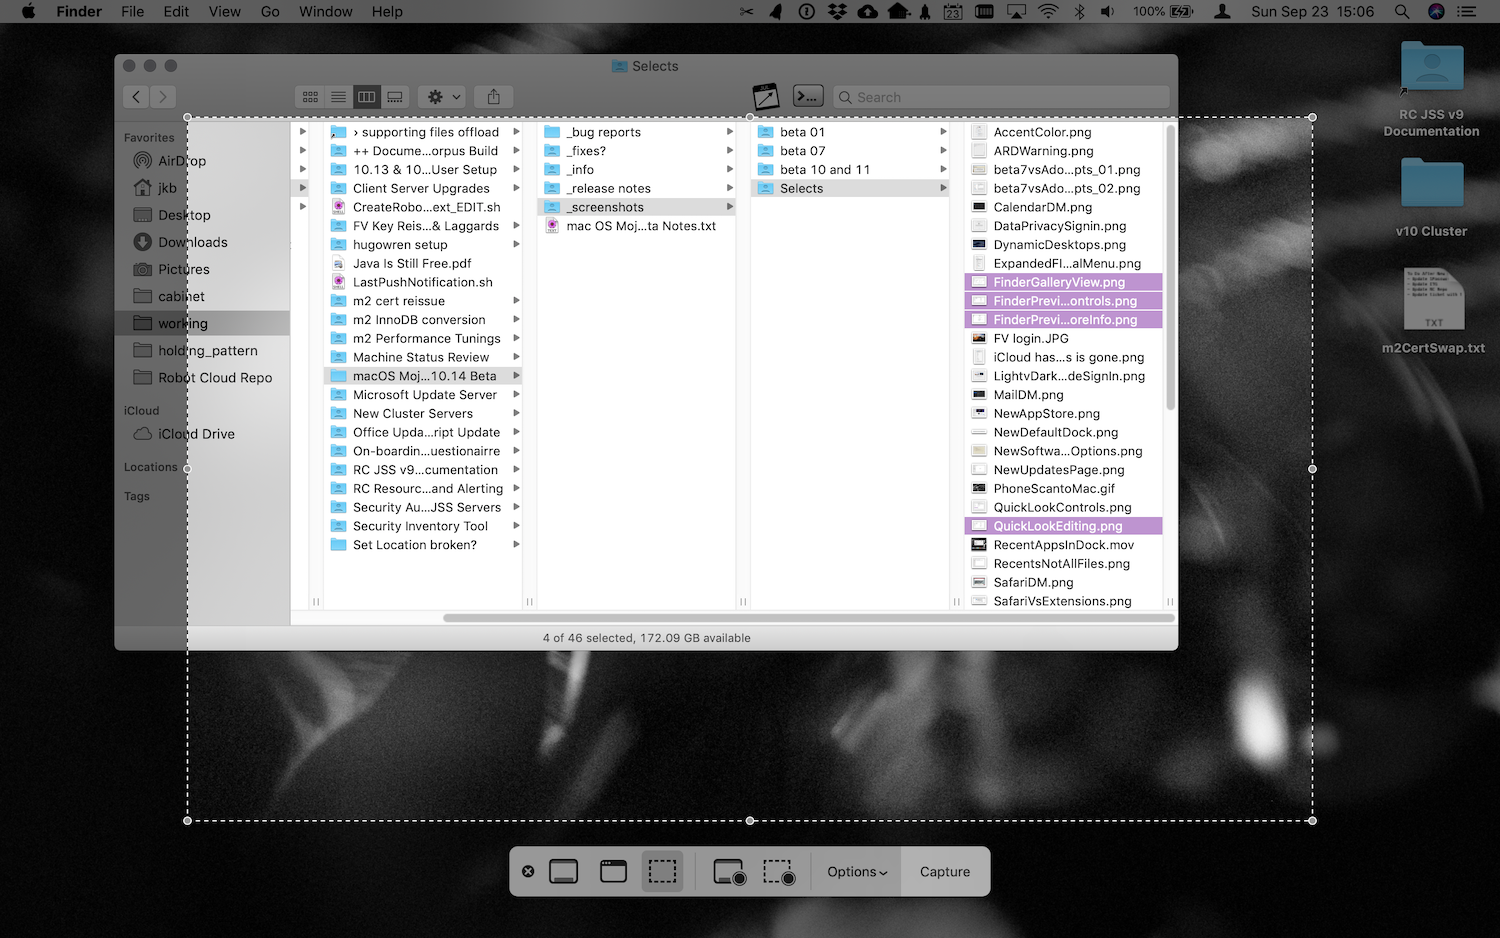 screen capture software for mac